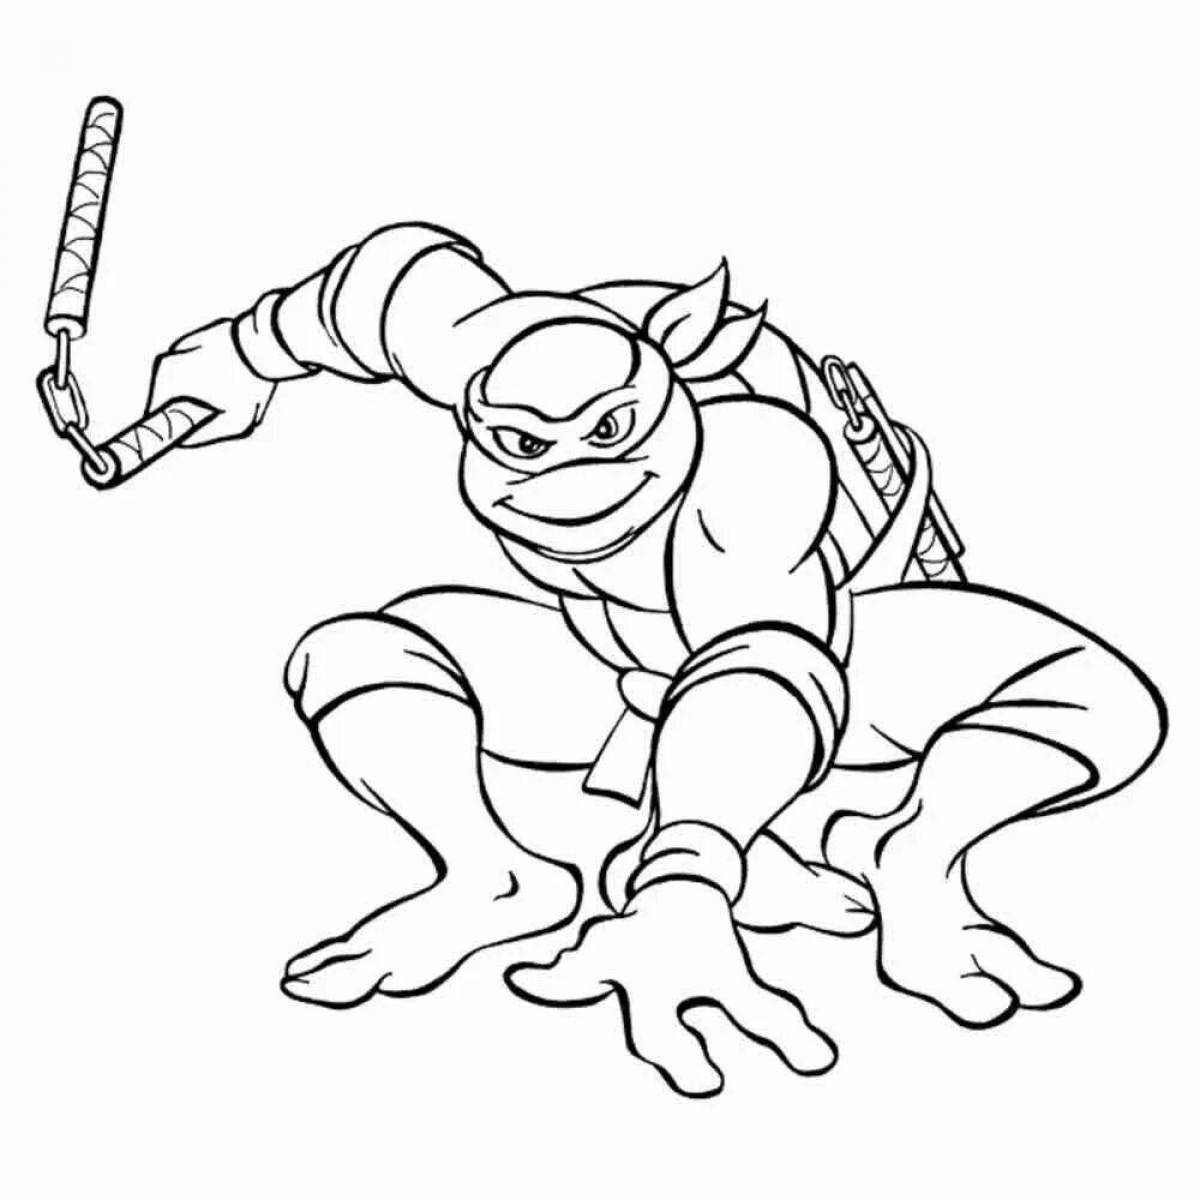 Fun gujitsu heroes coloring page для детей